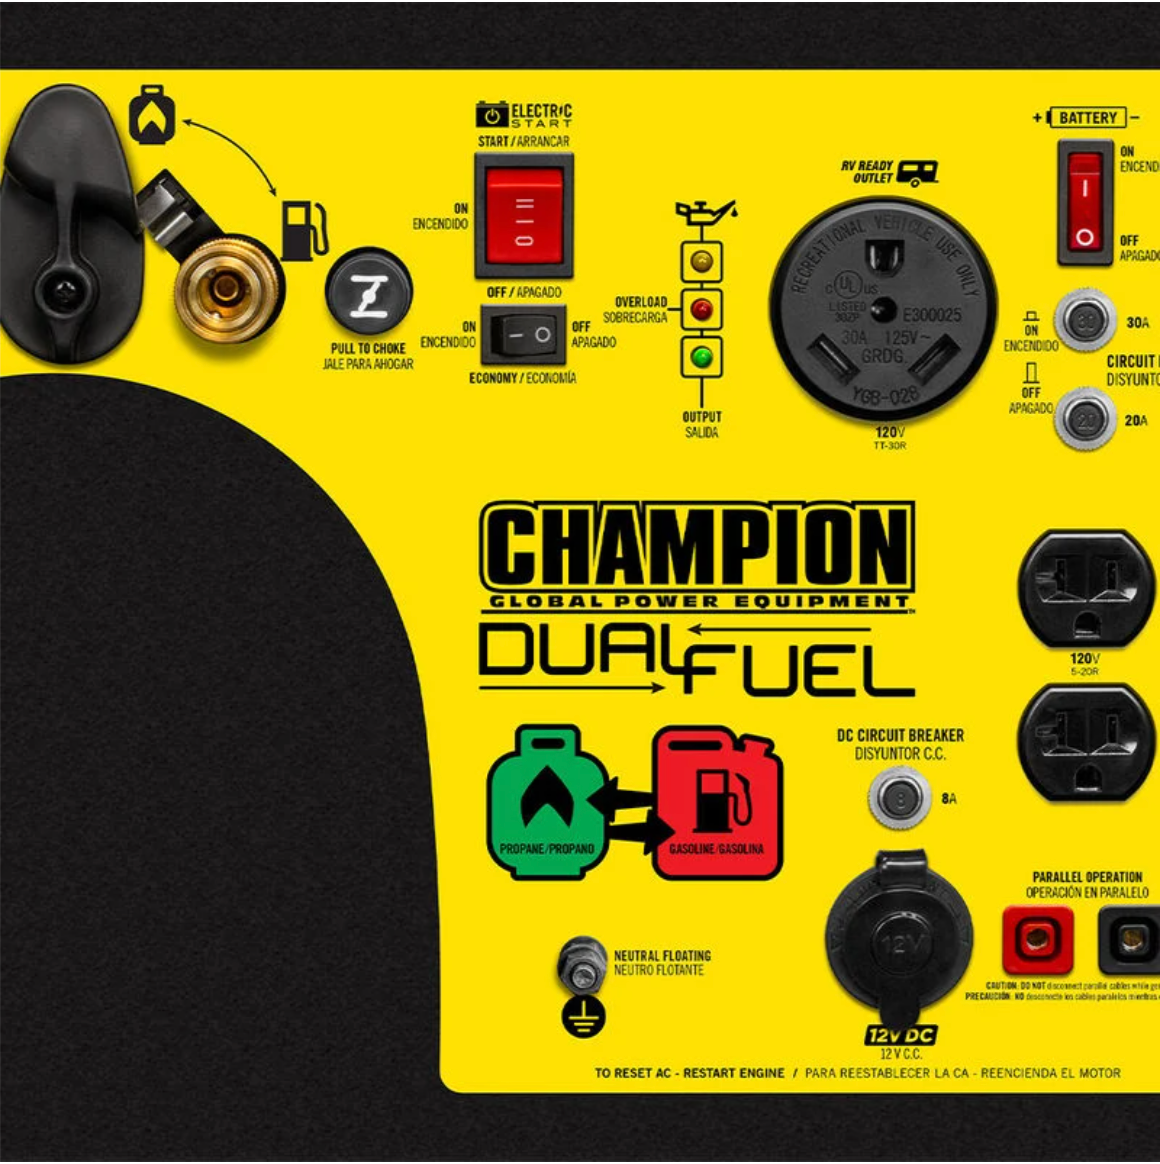 Champion Dual Fuel Generator Rental